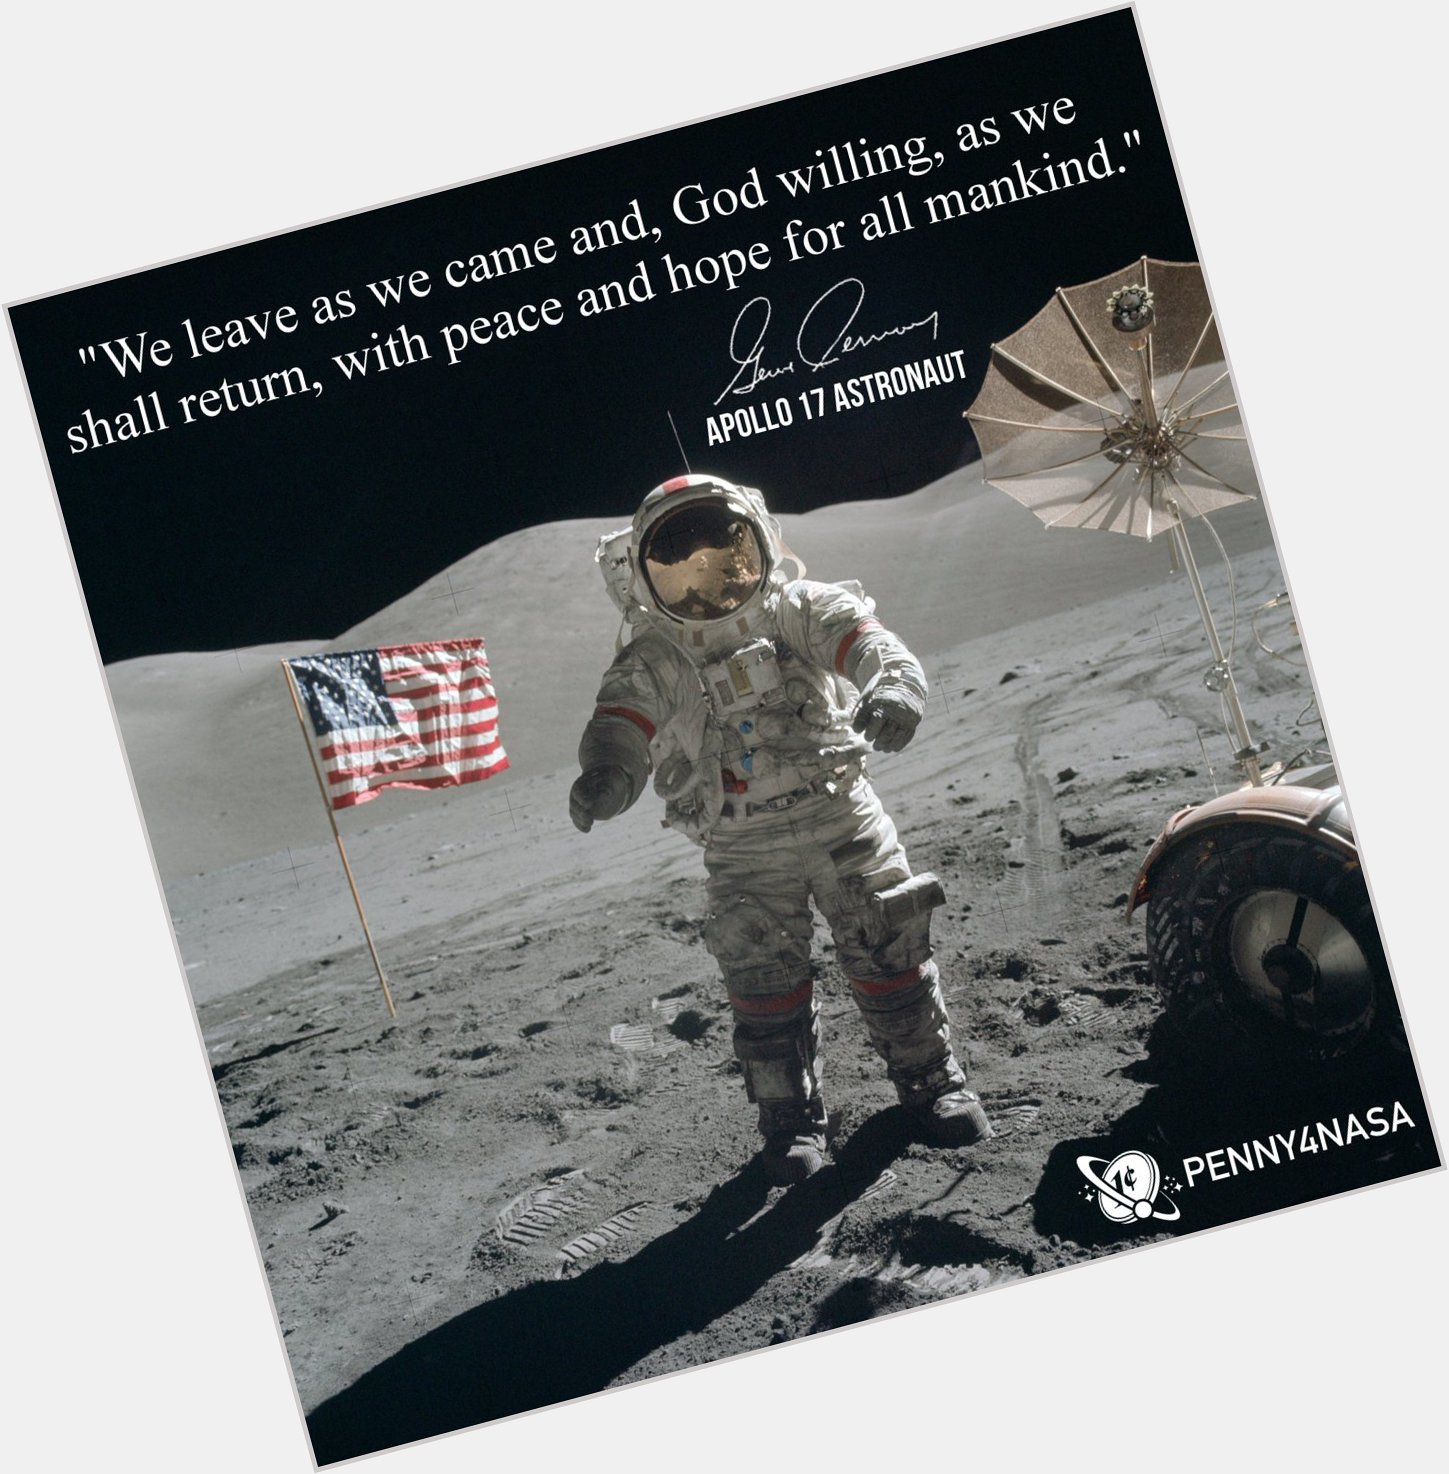 Happy birthday to the last man to walk on the moon, Eugene Cernan!   